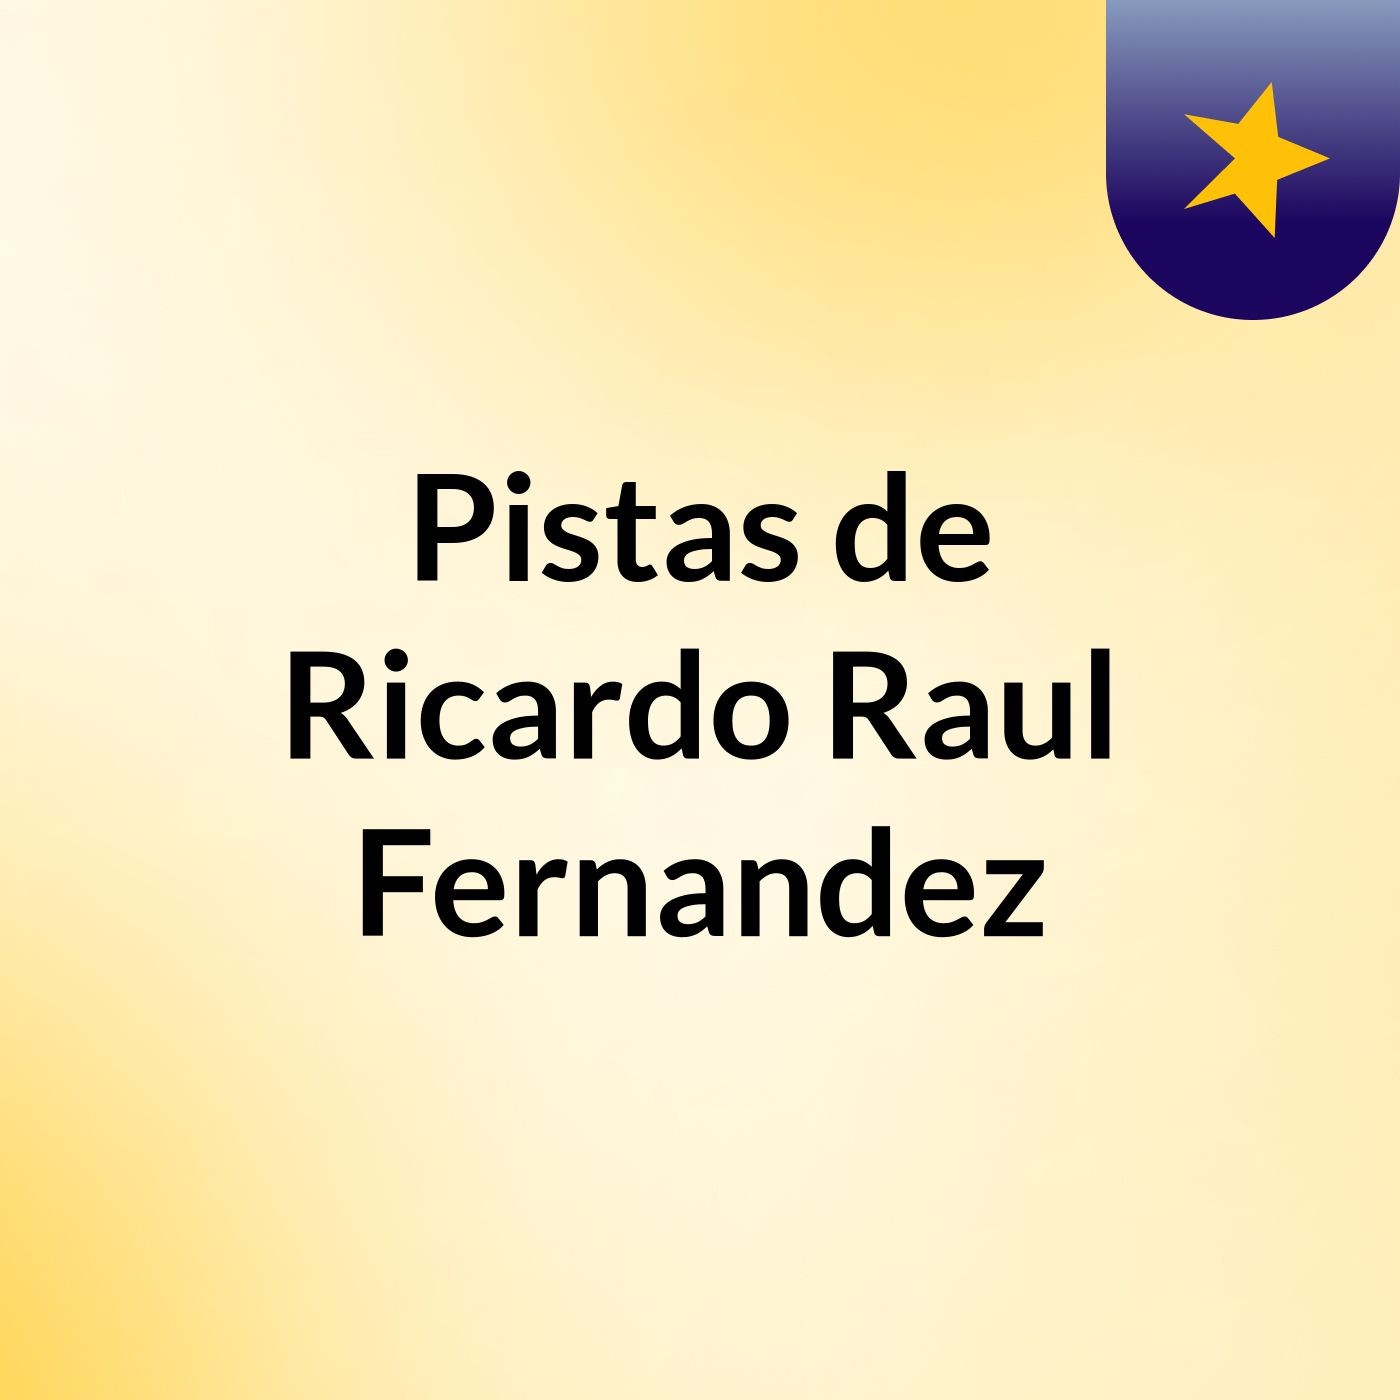 Pistas de Ricardo Raul Fernandez